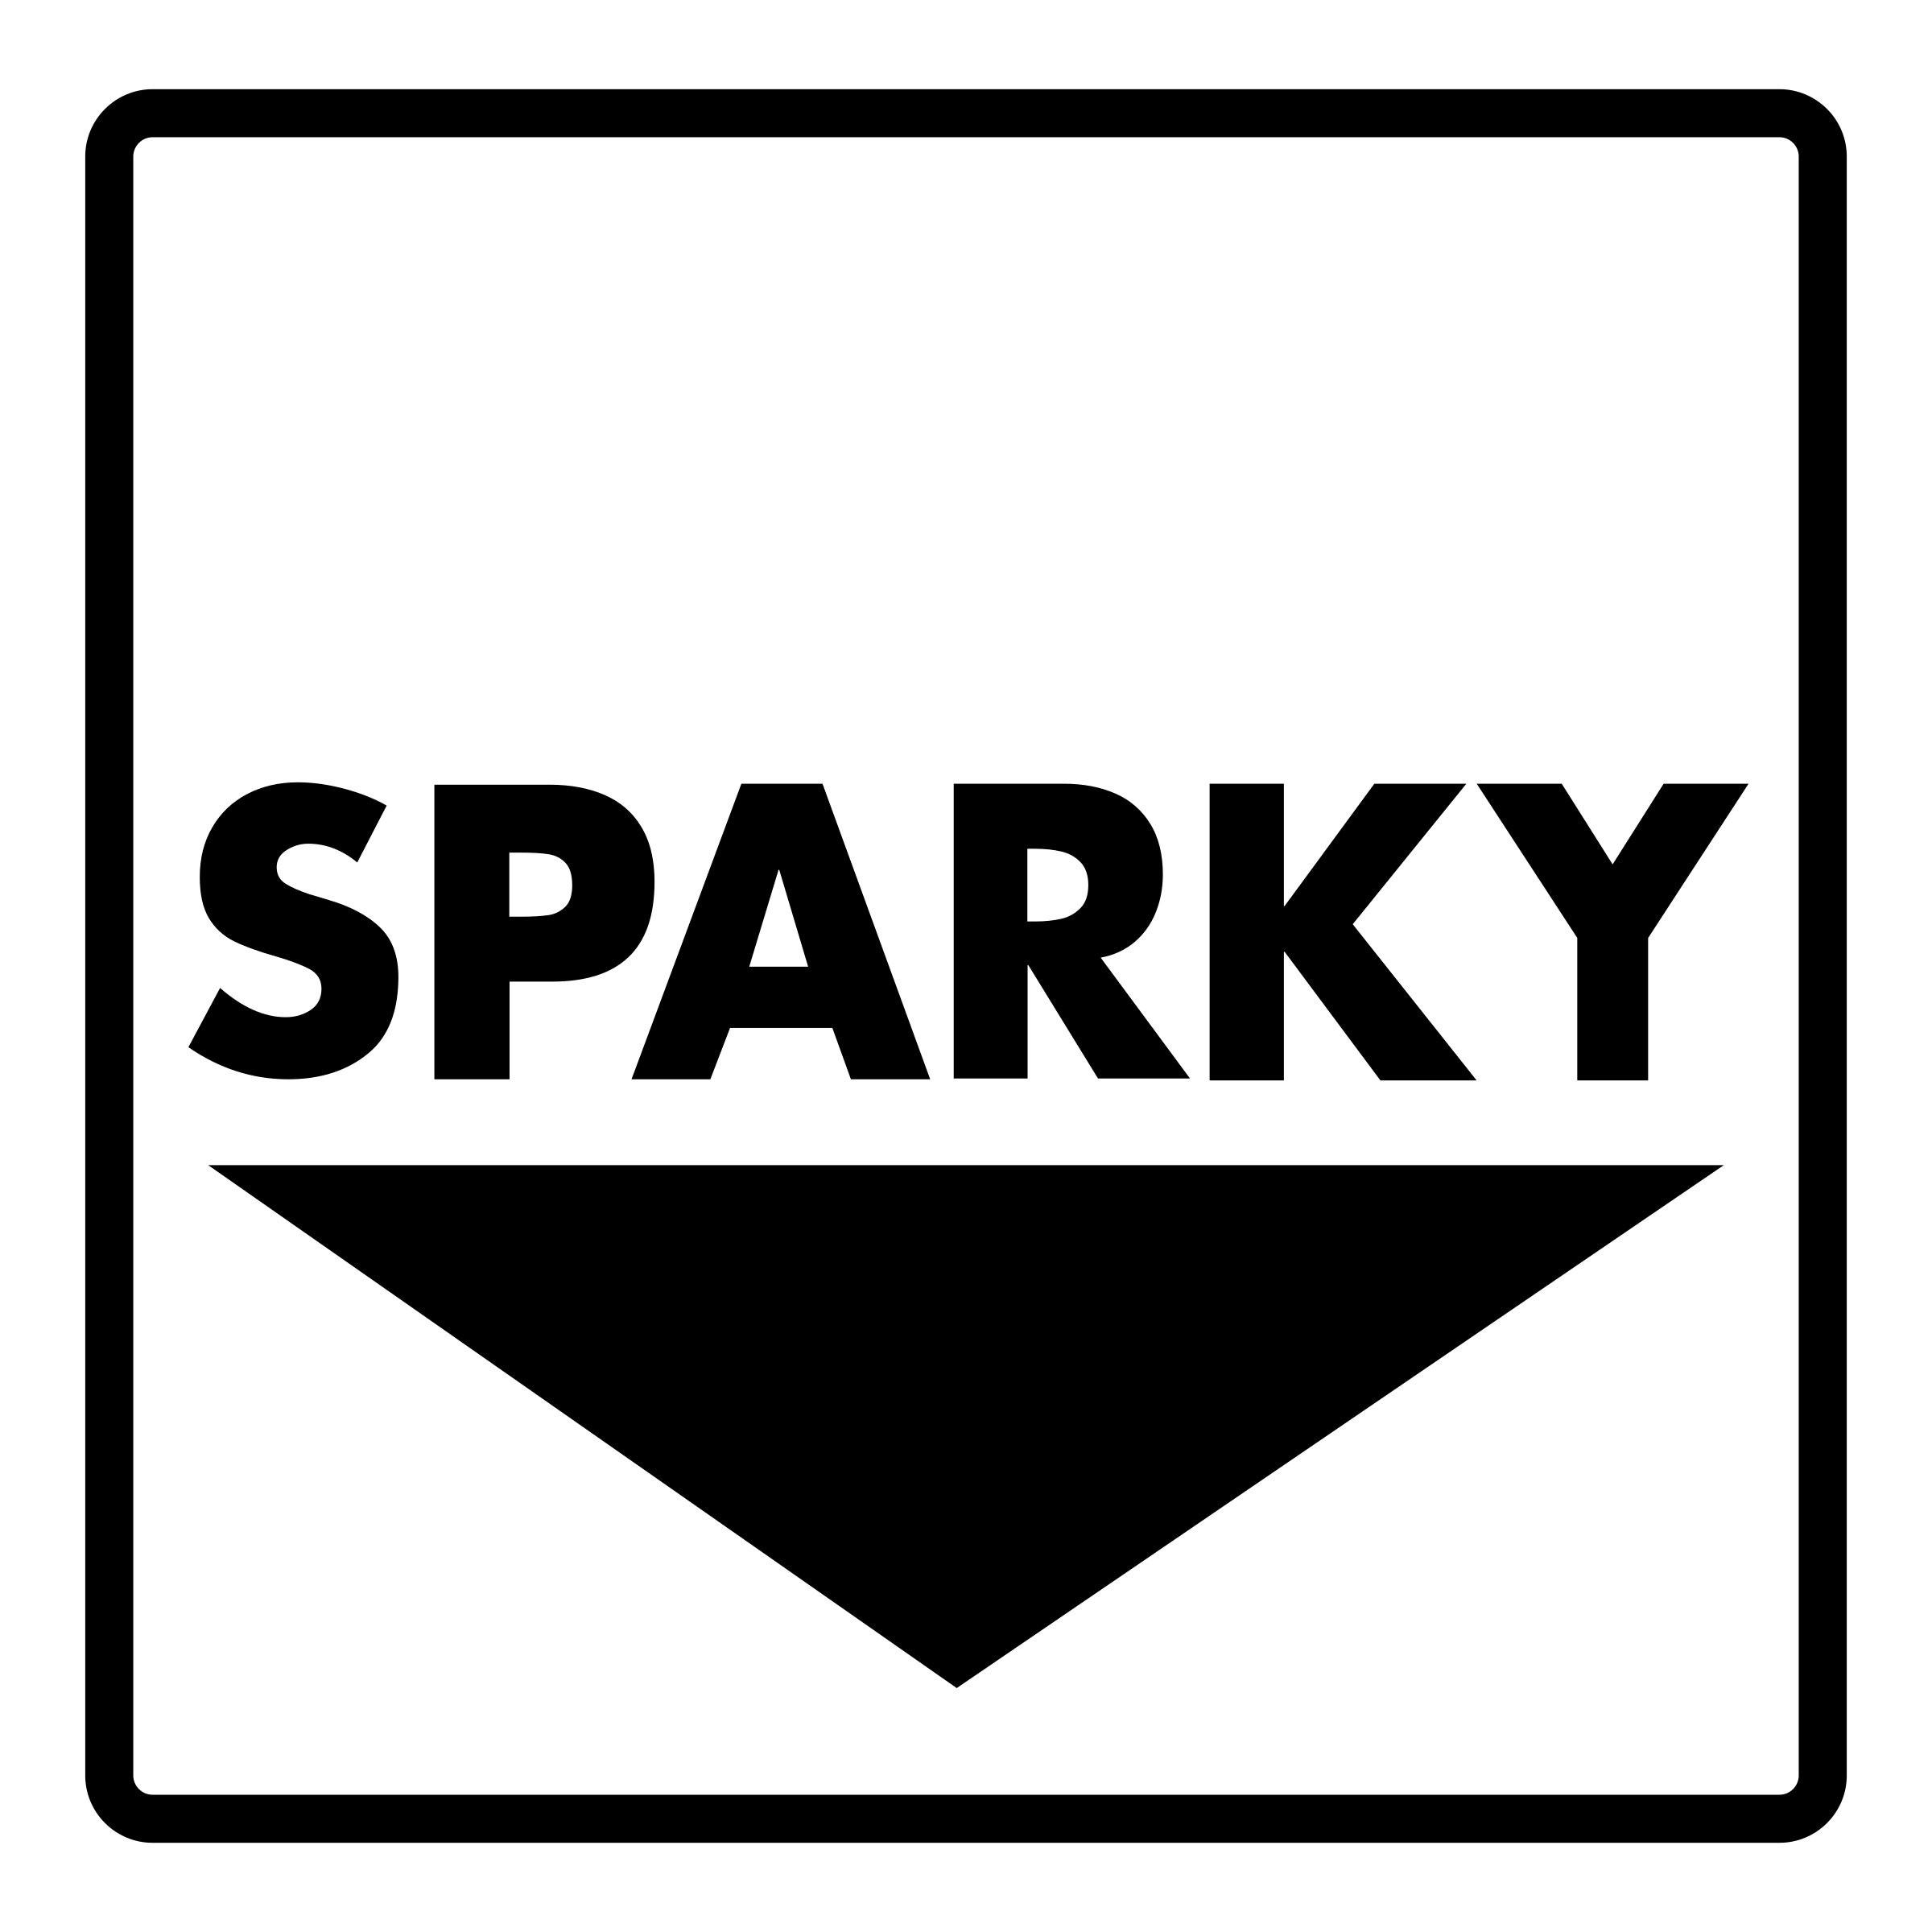 Sparky Logo - Sparky Logo PNG Transparent & SVG Vector - Freebie Supply